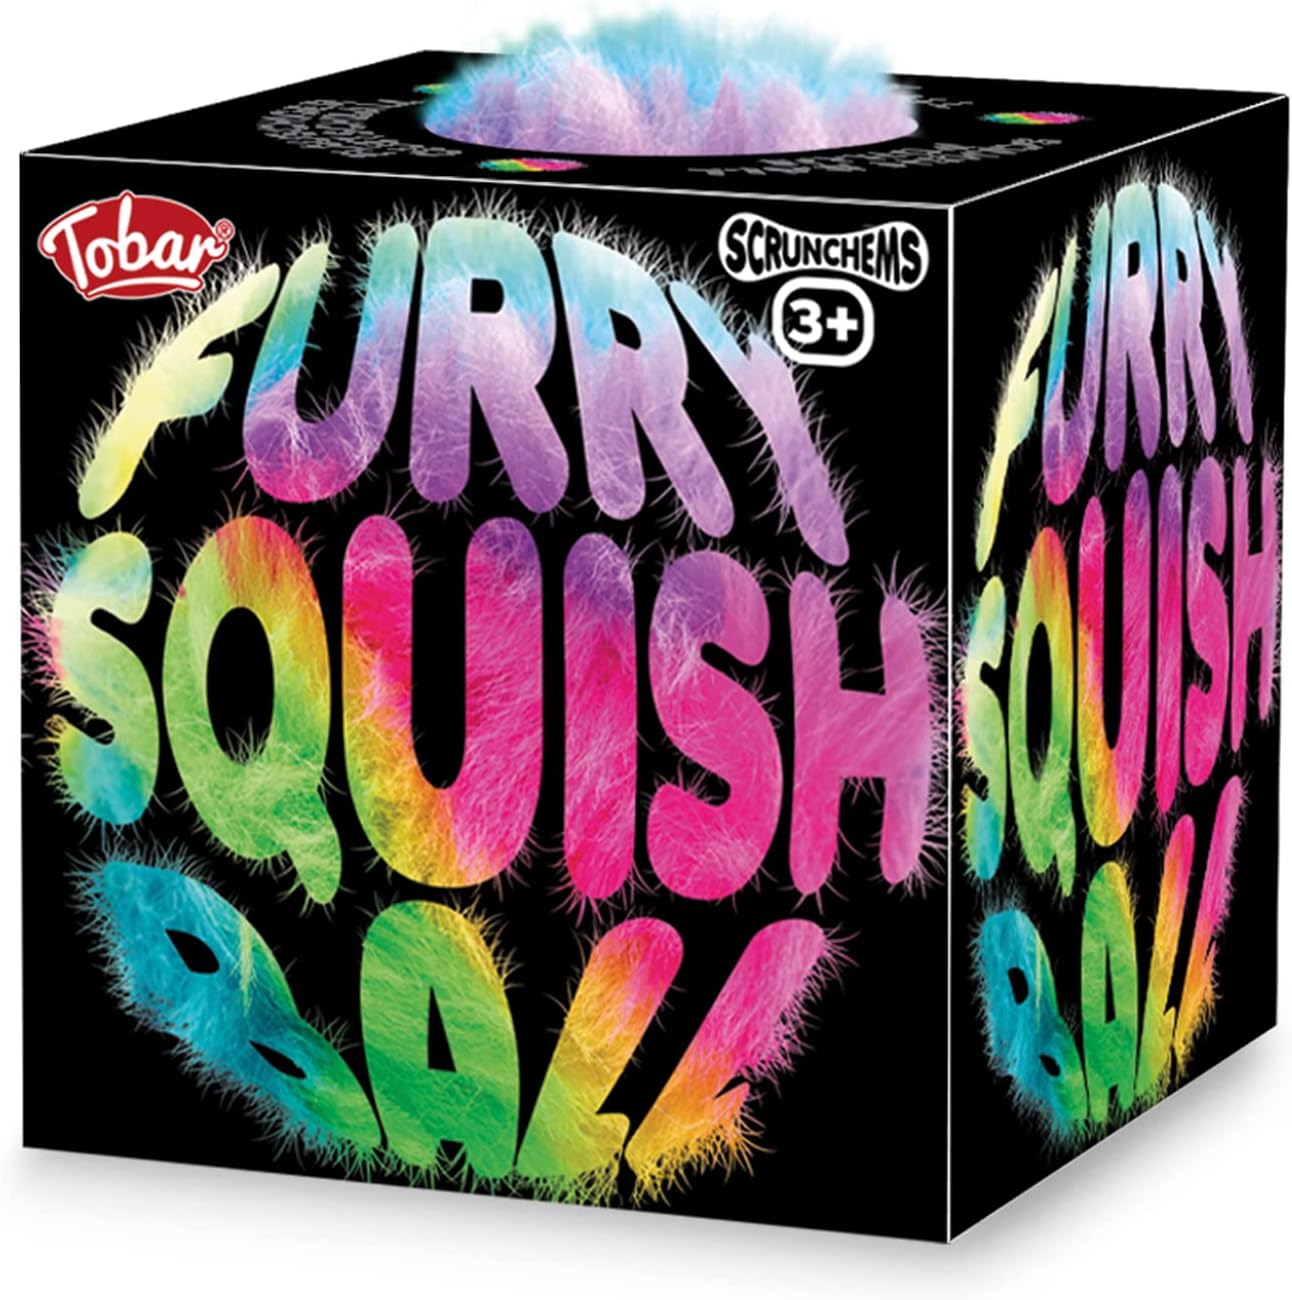 Scrunchems Furry Squish Ball in box